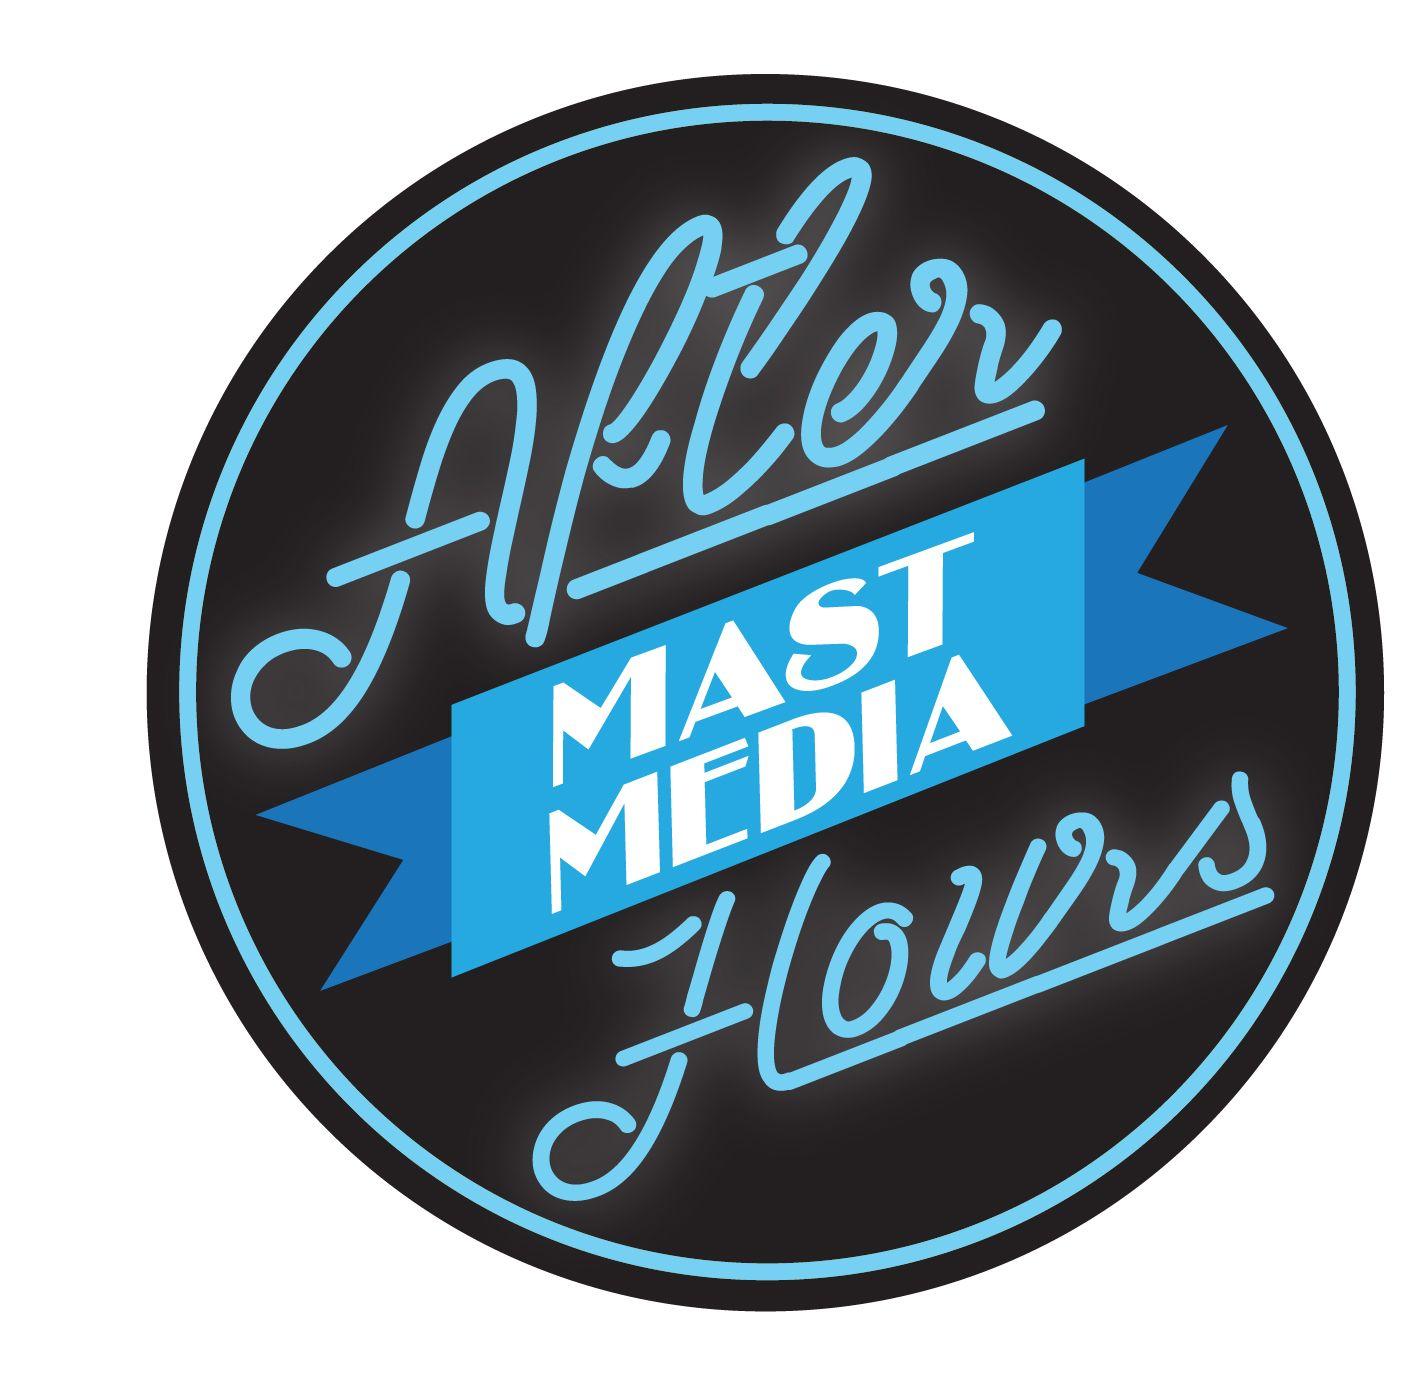 Radio Show Logo - Mast Radio Show Logos